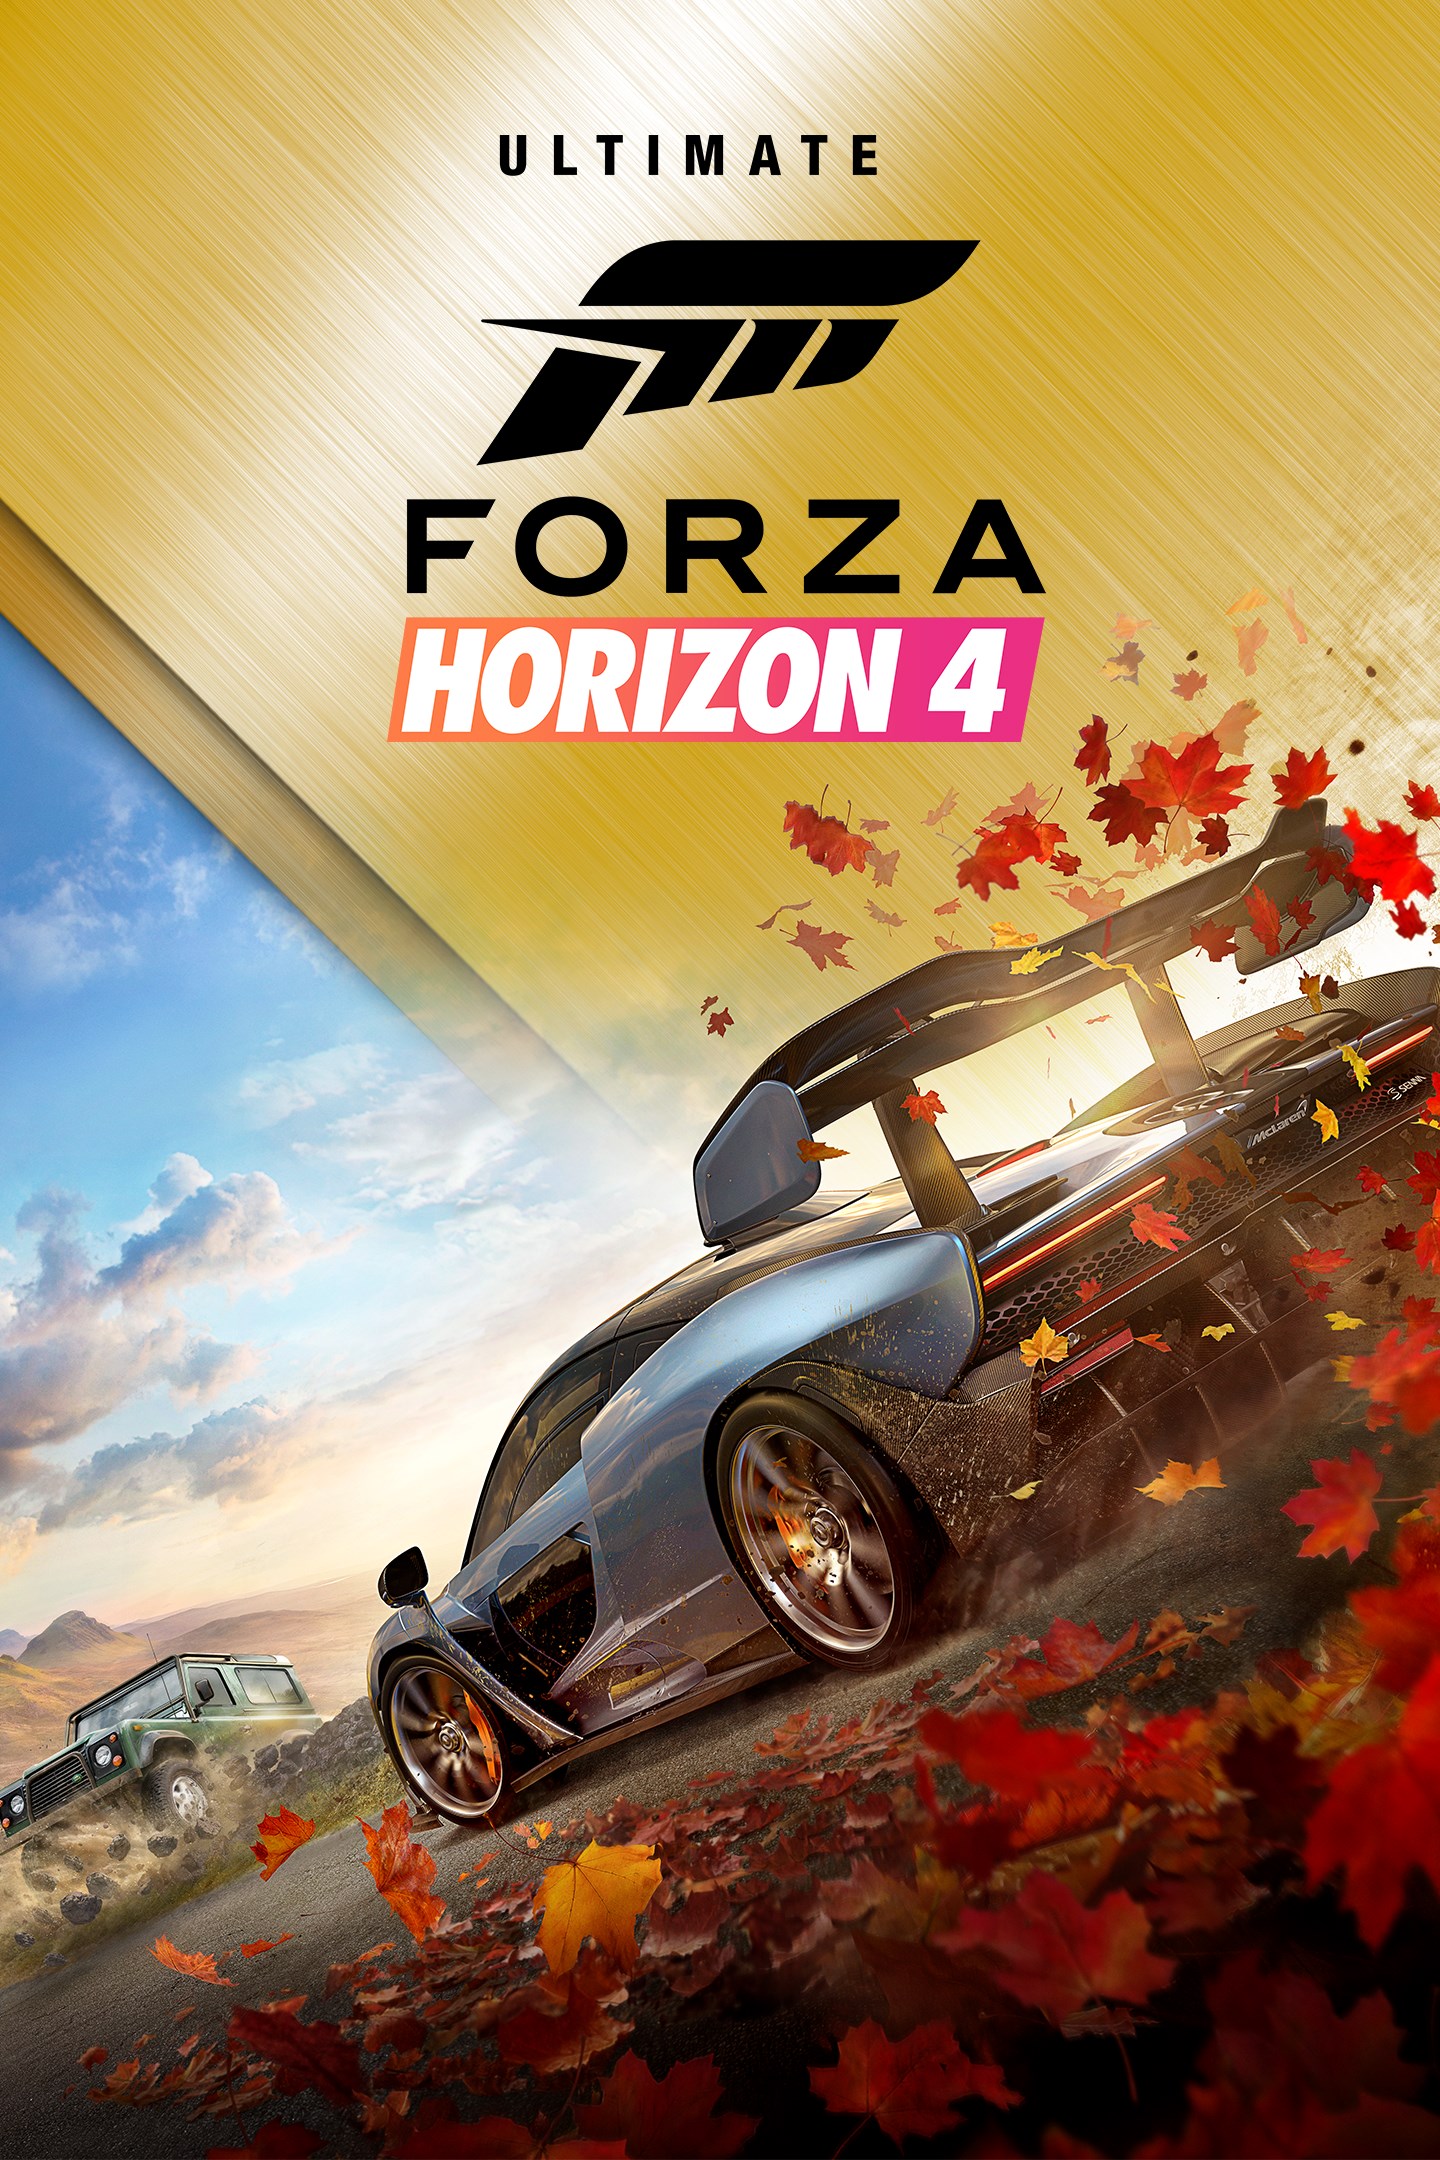 Forza Horizon 4 Ultimate Add-Ons Bundle (DLC) (Windows 10/Xbox One)